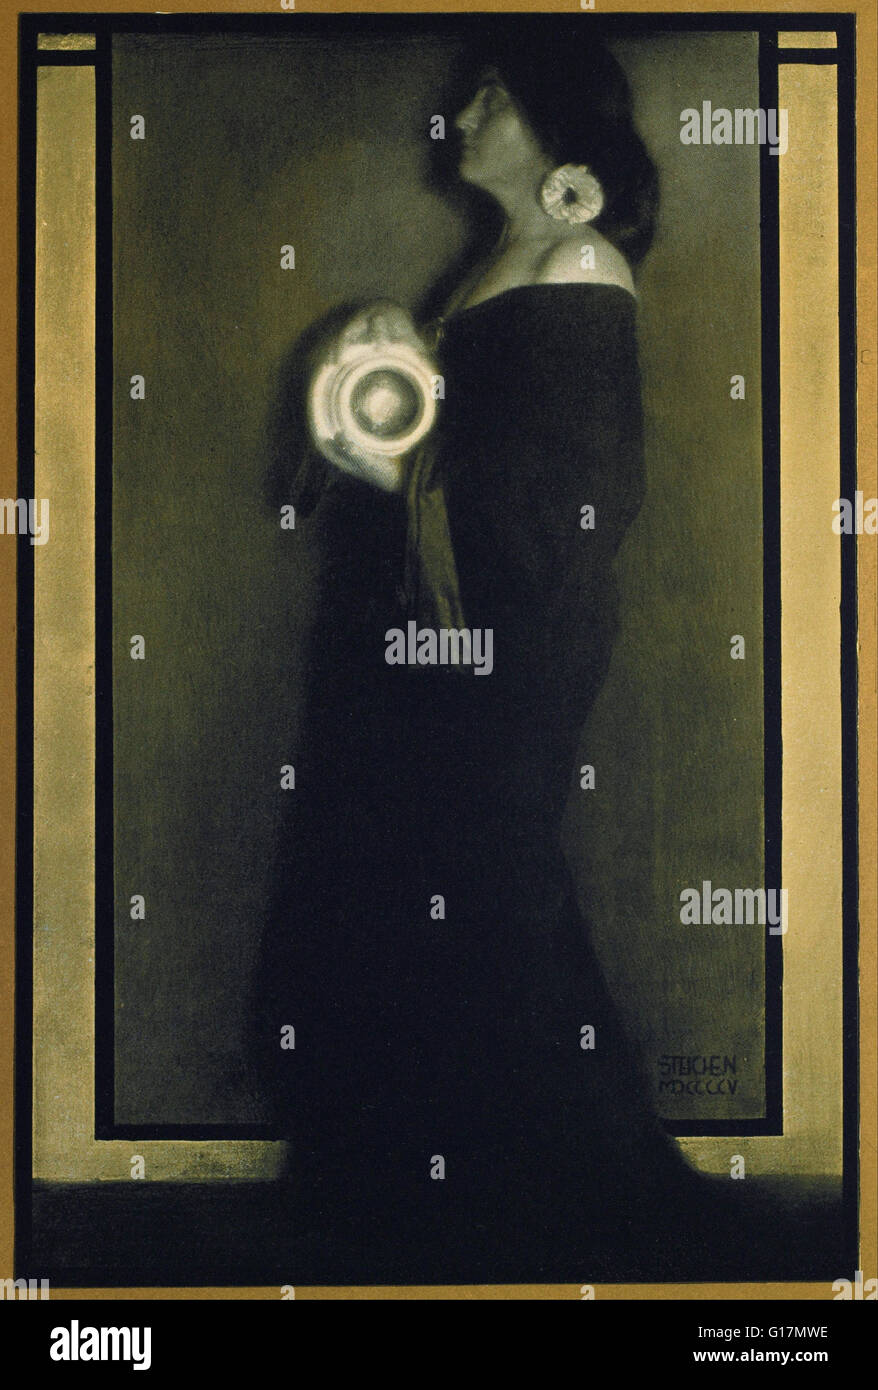 Edward Steichen - Cover Design - Minneapolis Institute of Art Stock Photo